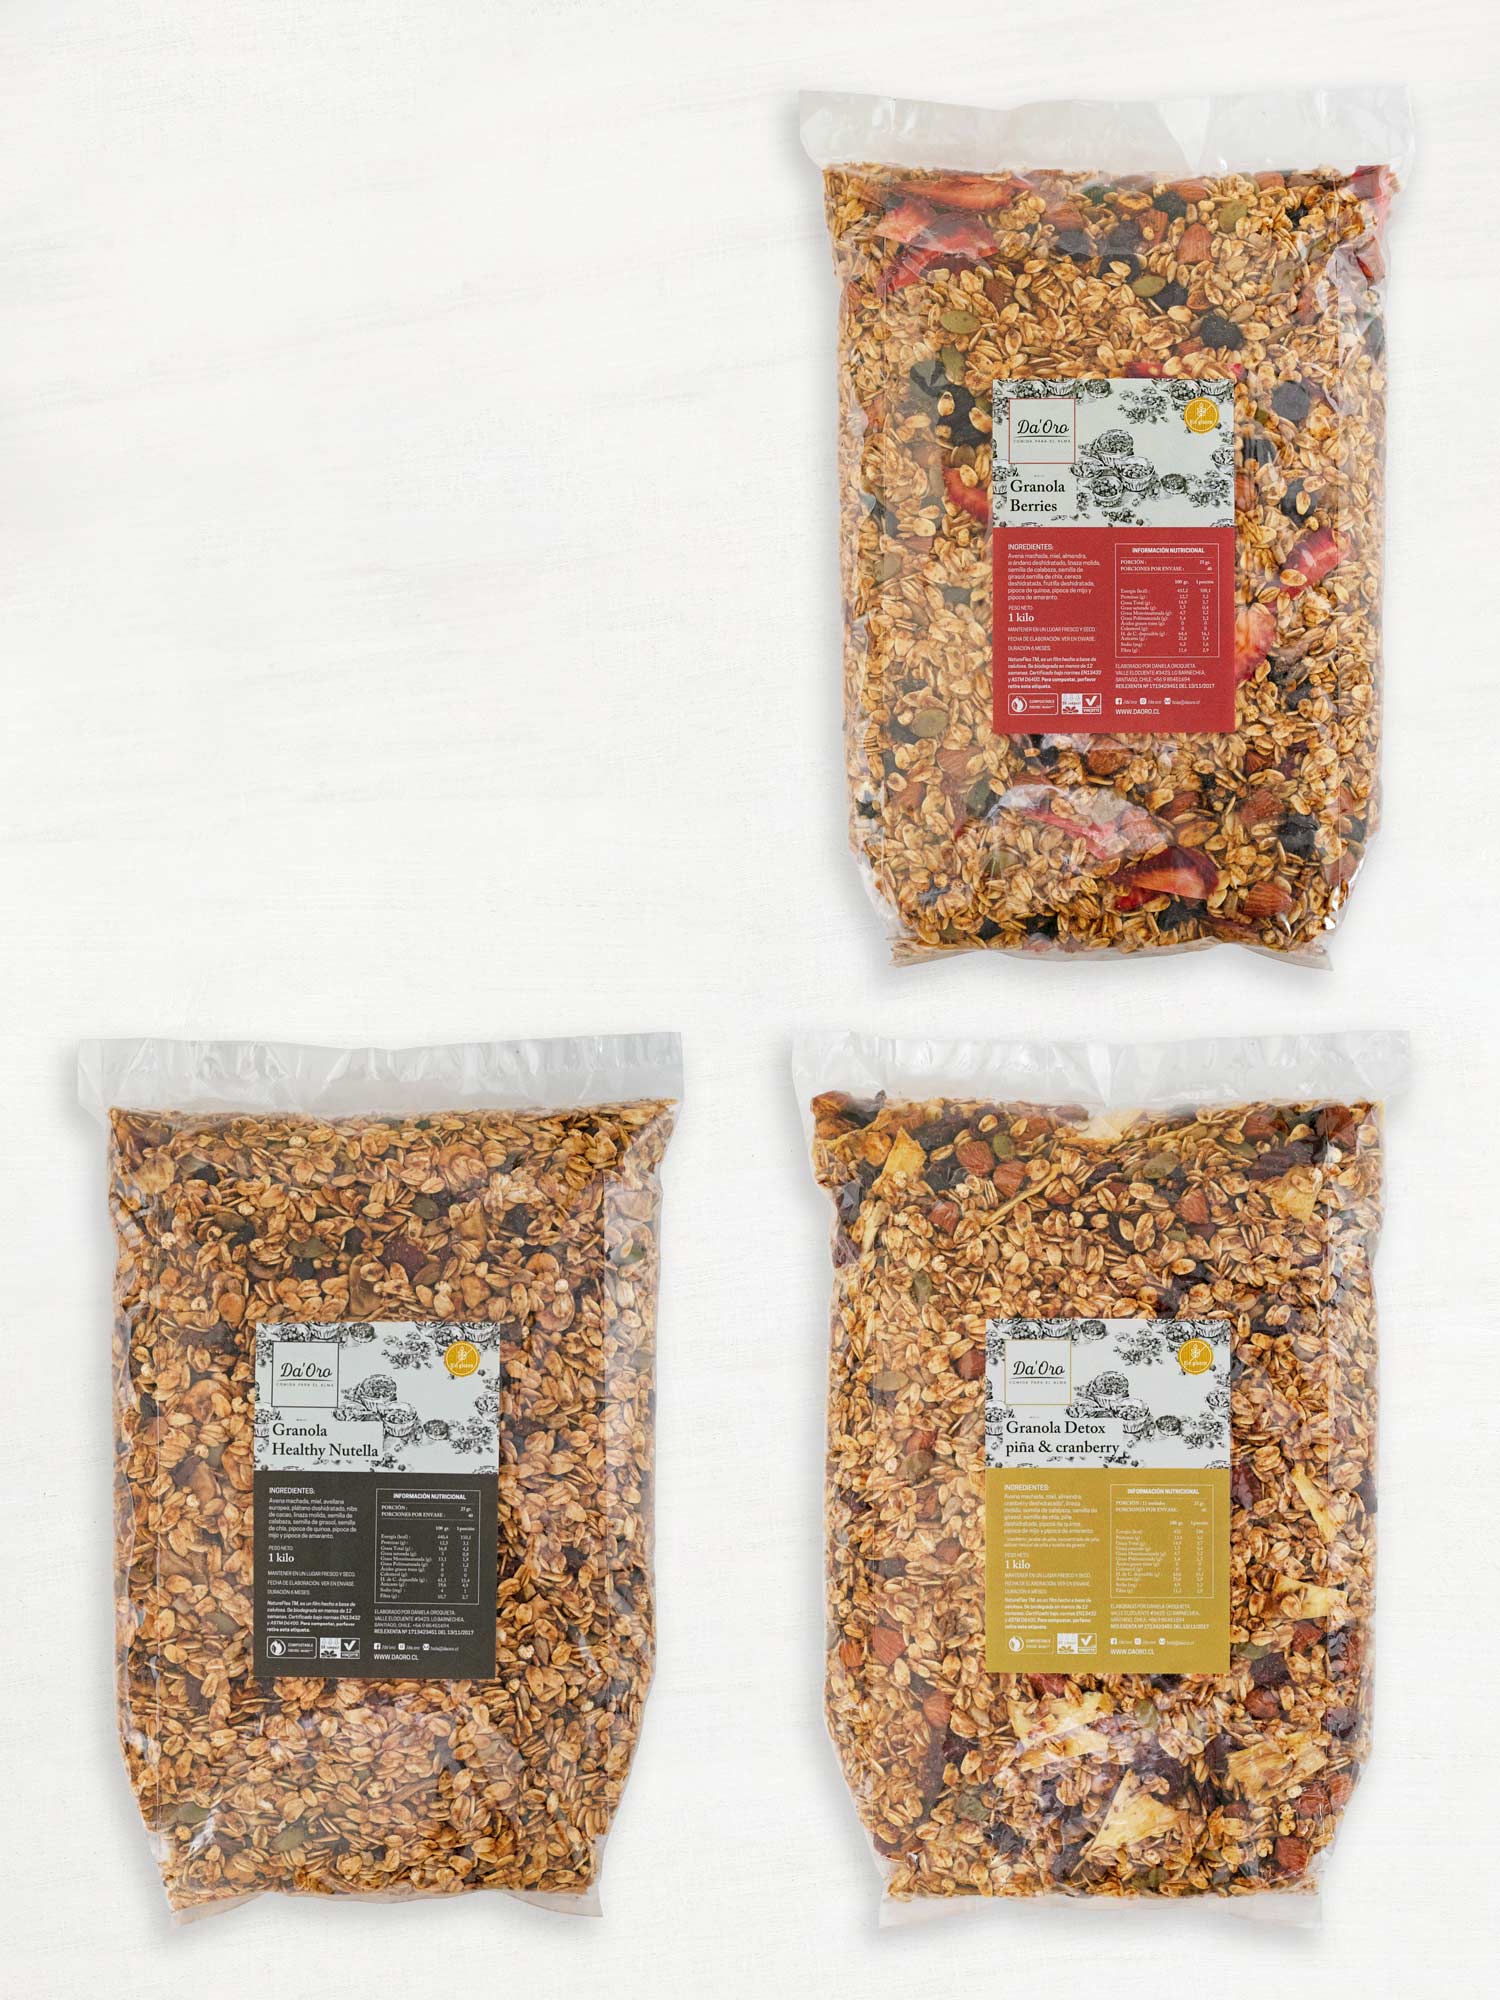 Tres bolsas transparentes con granola sin gluten de tamaño de 1 kilo